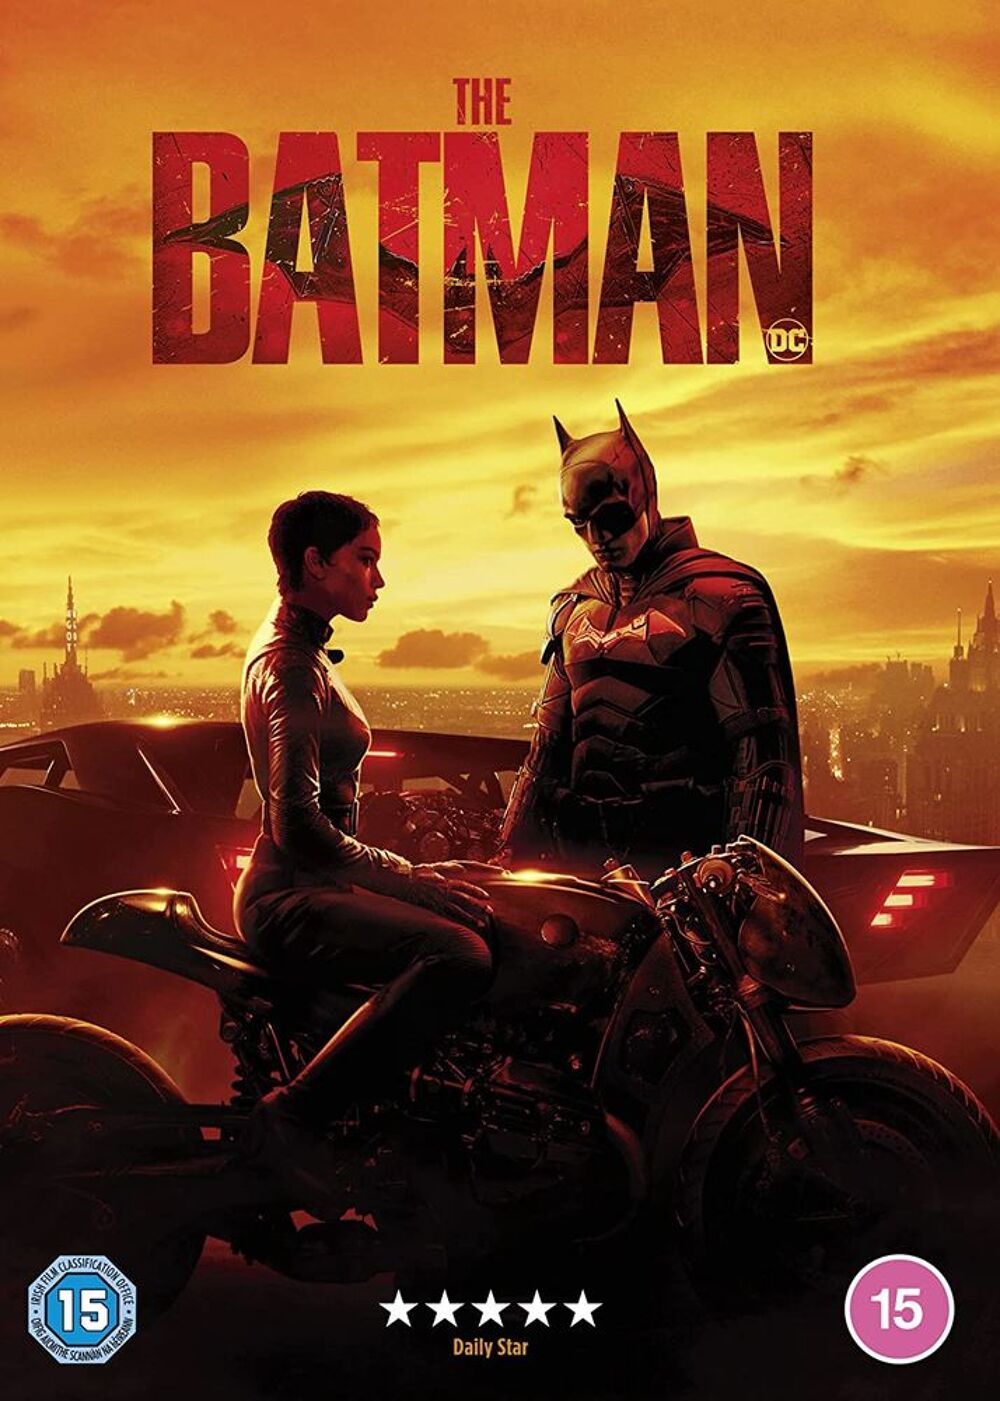 THE BATMAN 2022 DVD et blu-ray